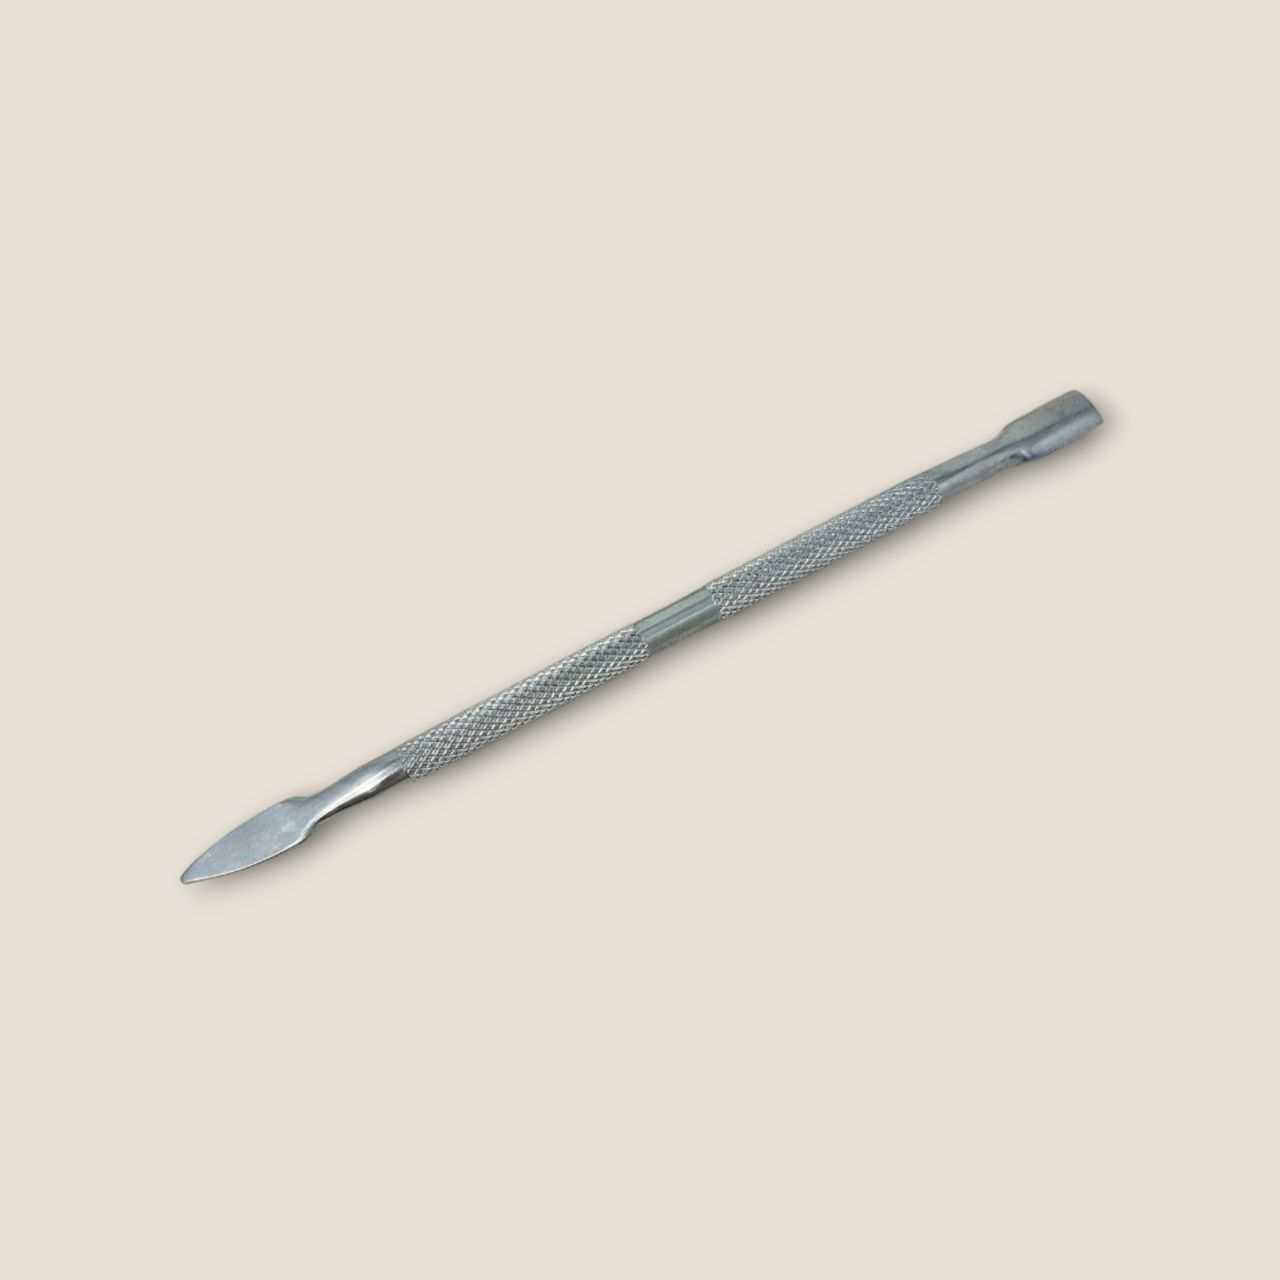 Stainless steel stirring rod